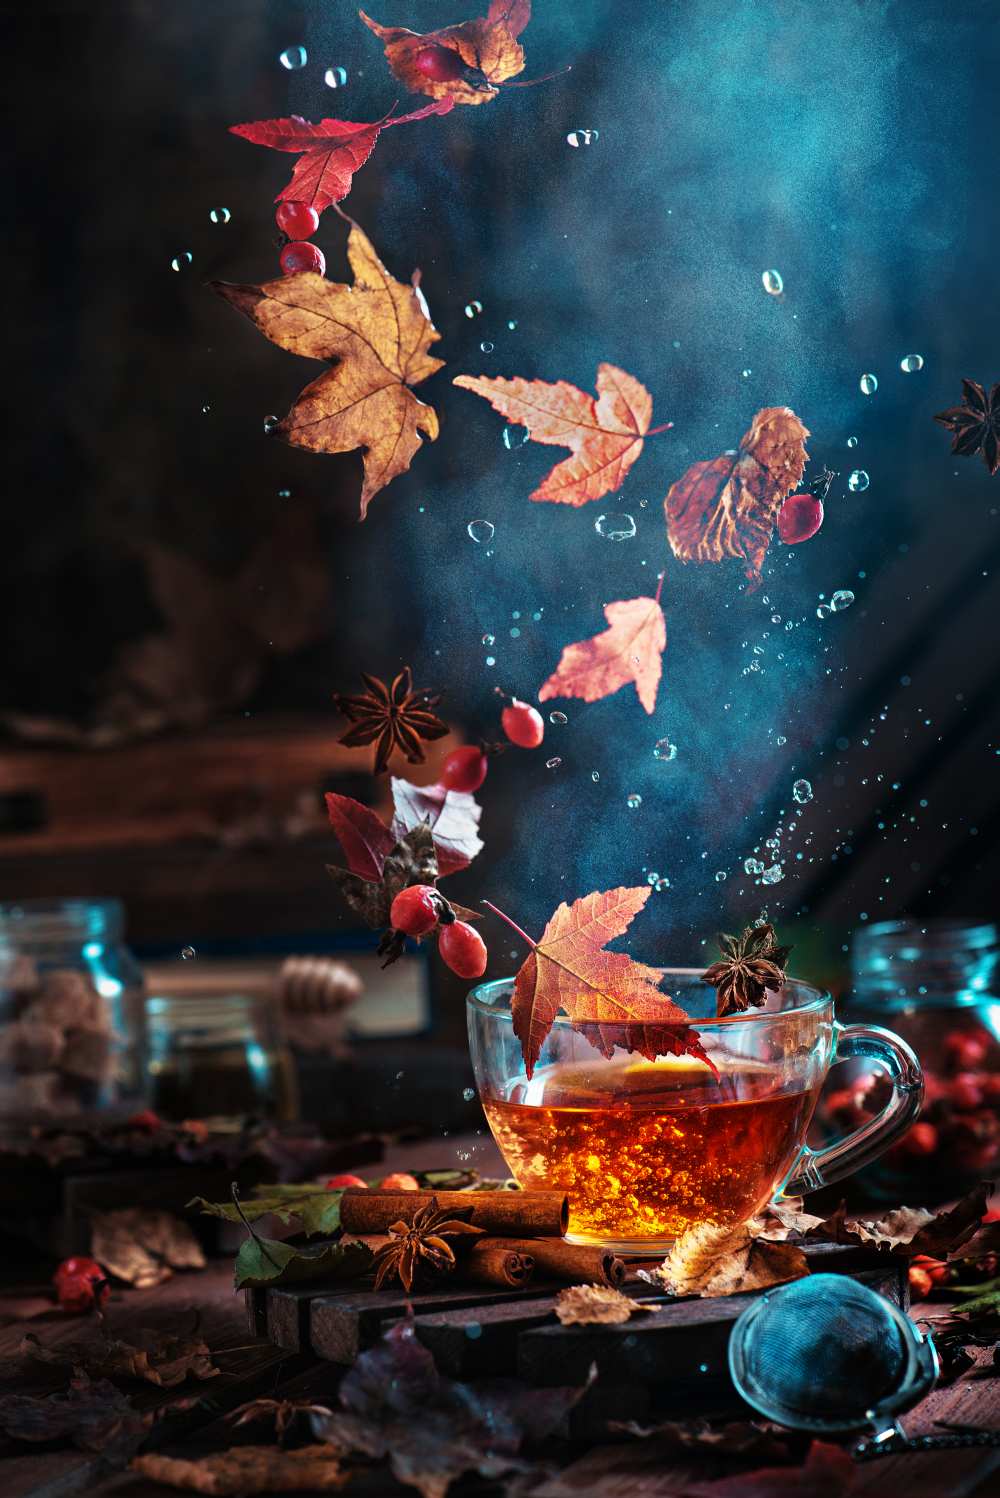 Briar tea with autumn swirl from Dina Belenko